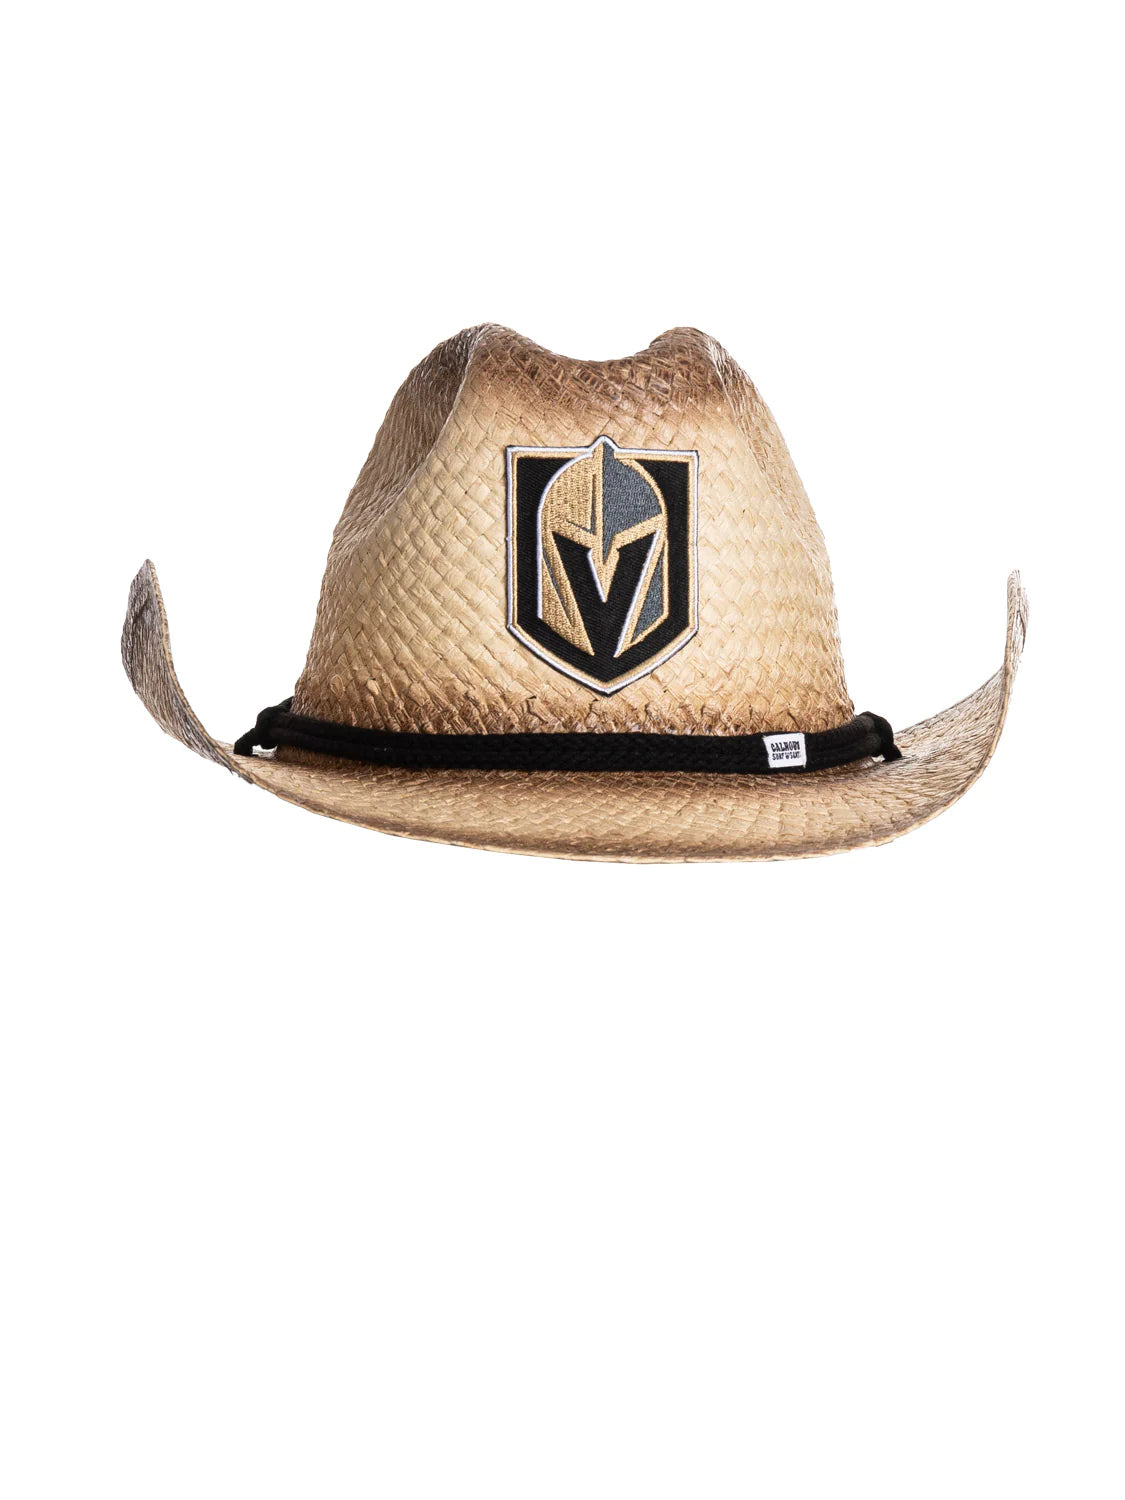 Vegas Golden Knights Cowboy Hat